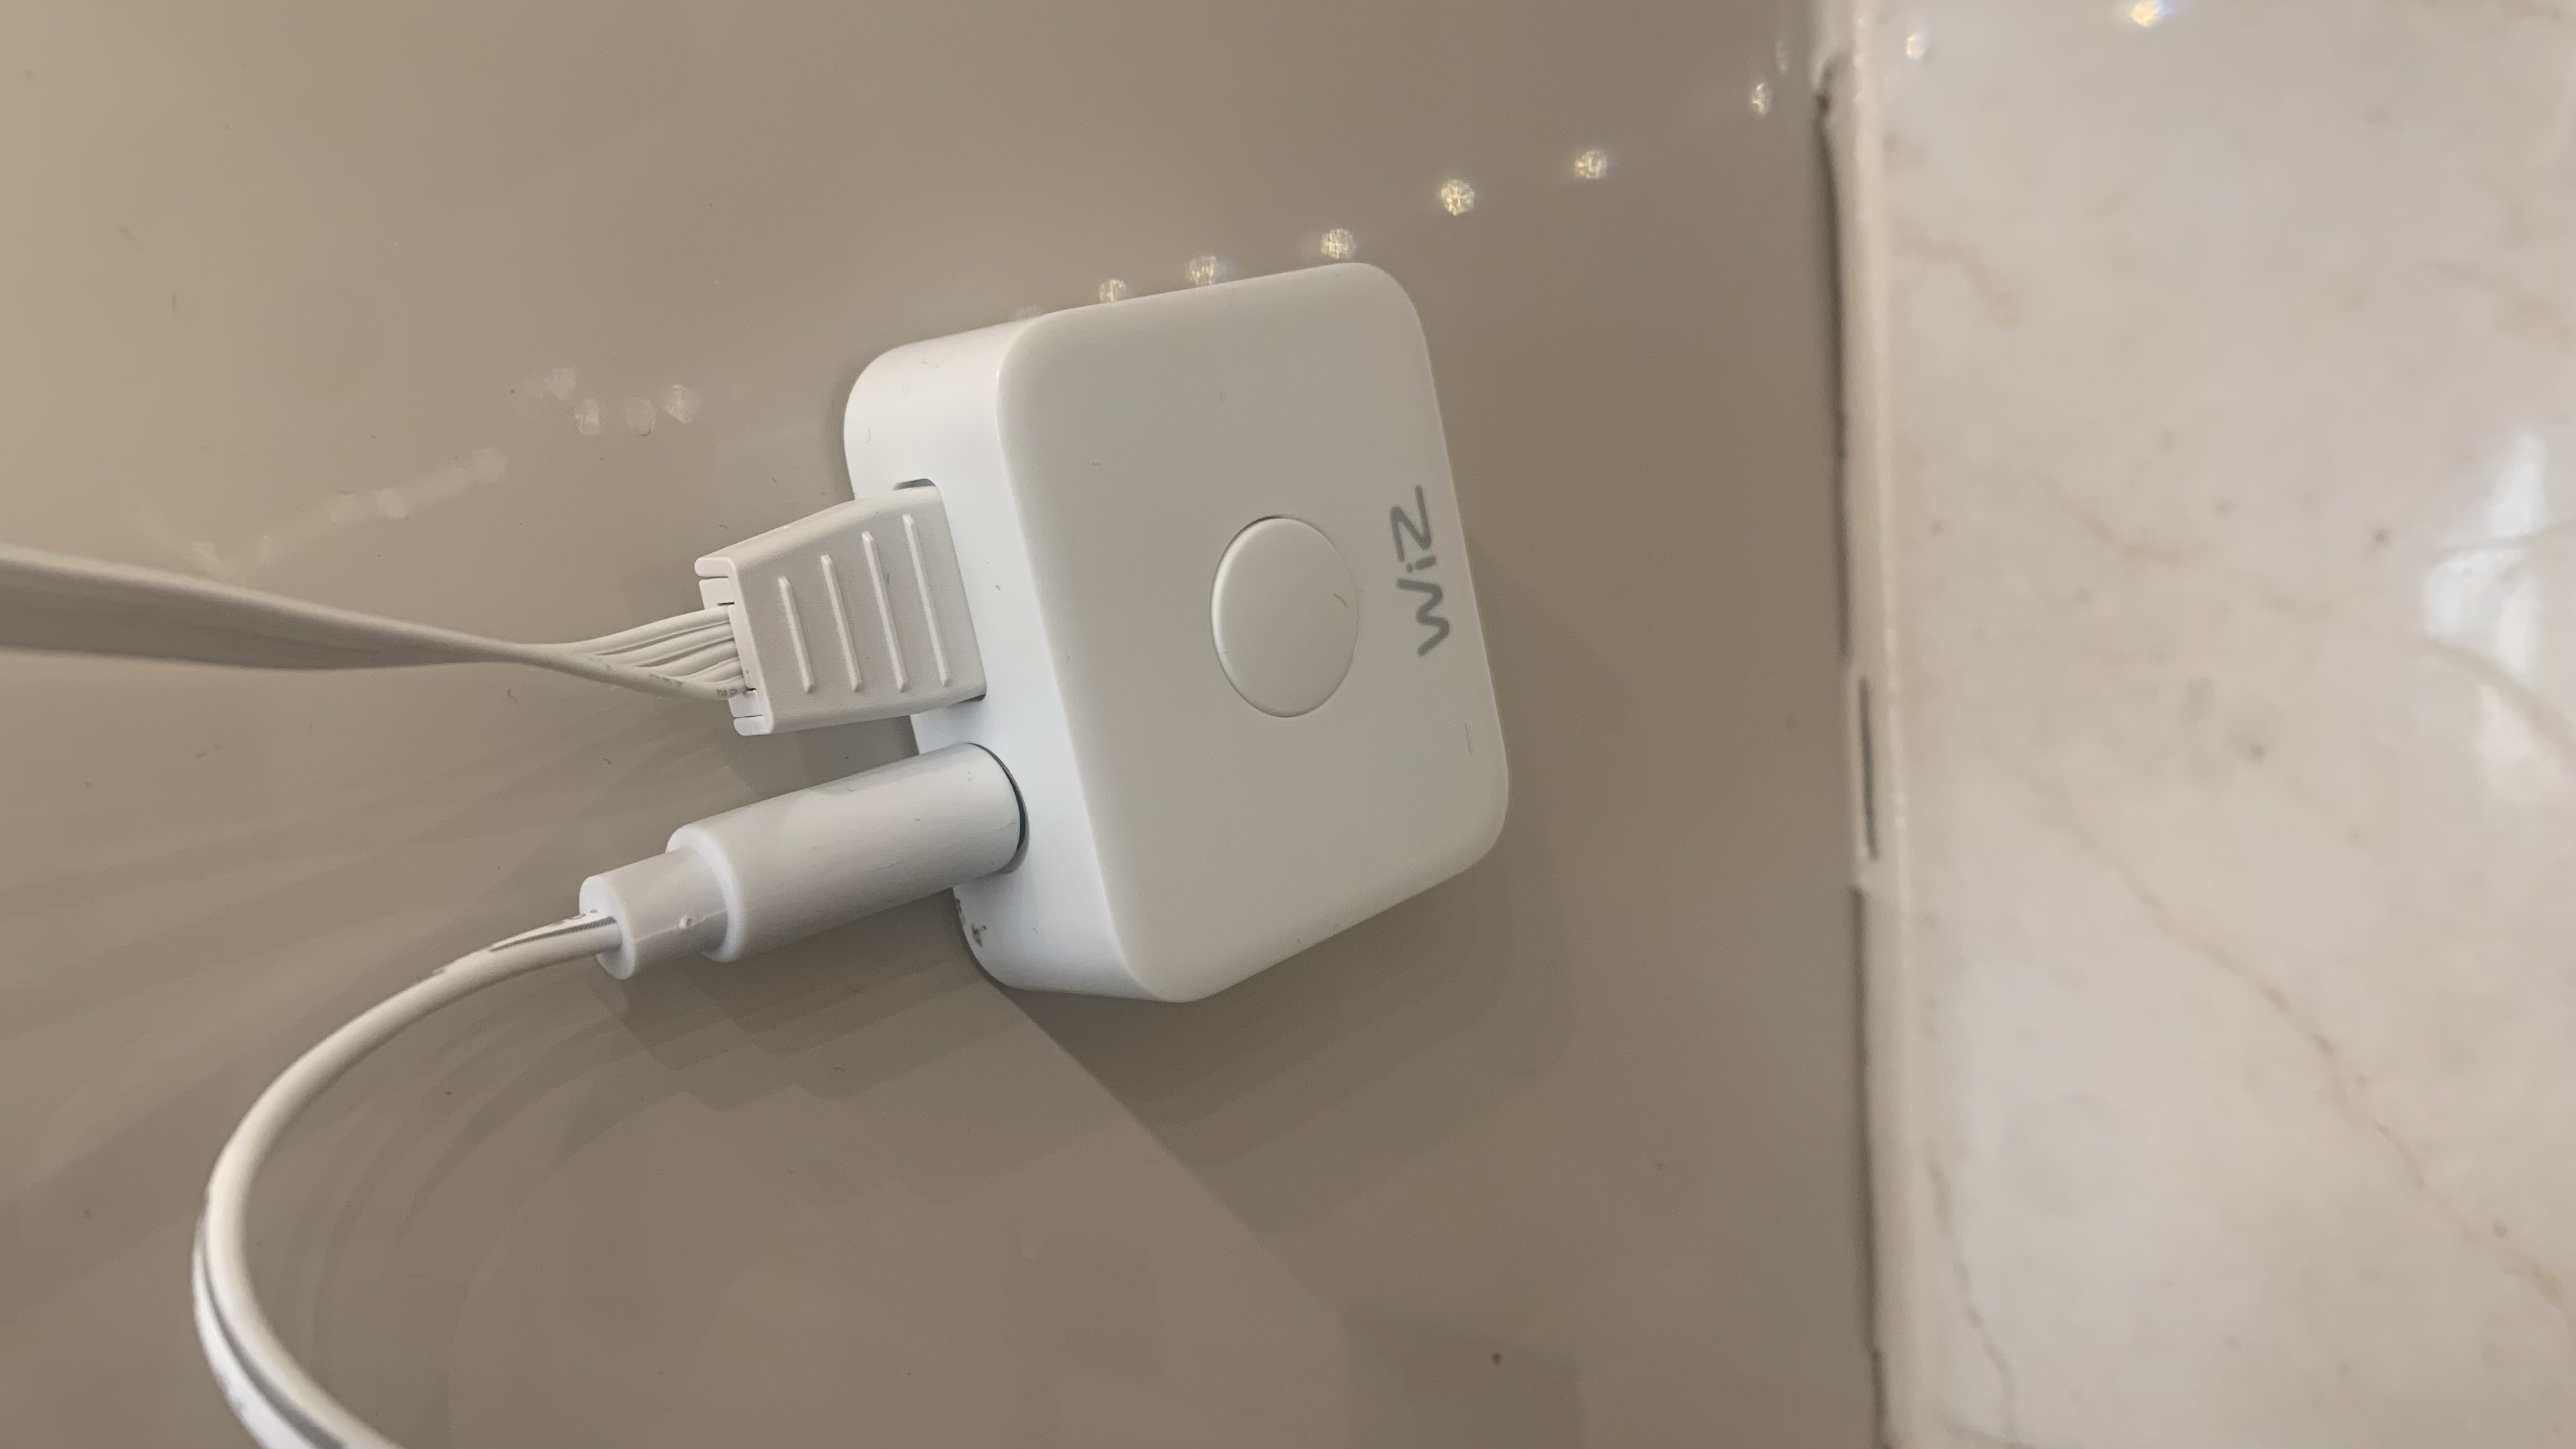 WiZ LED Strip smart light switch, stuck on a wall